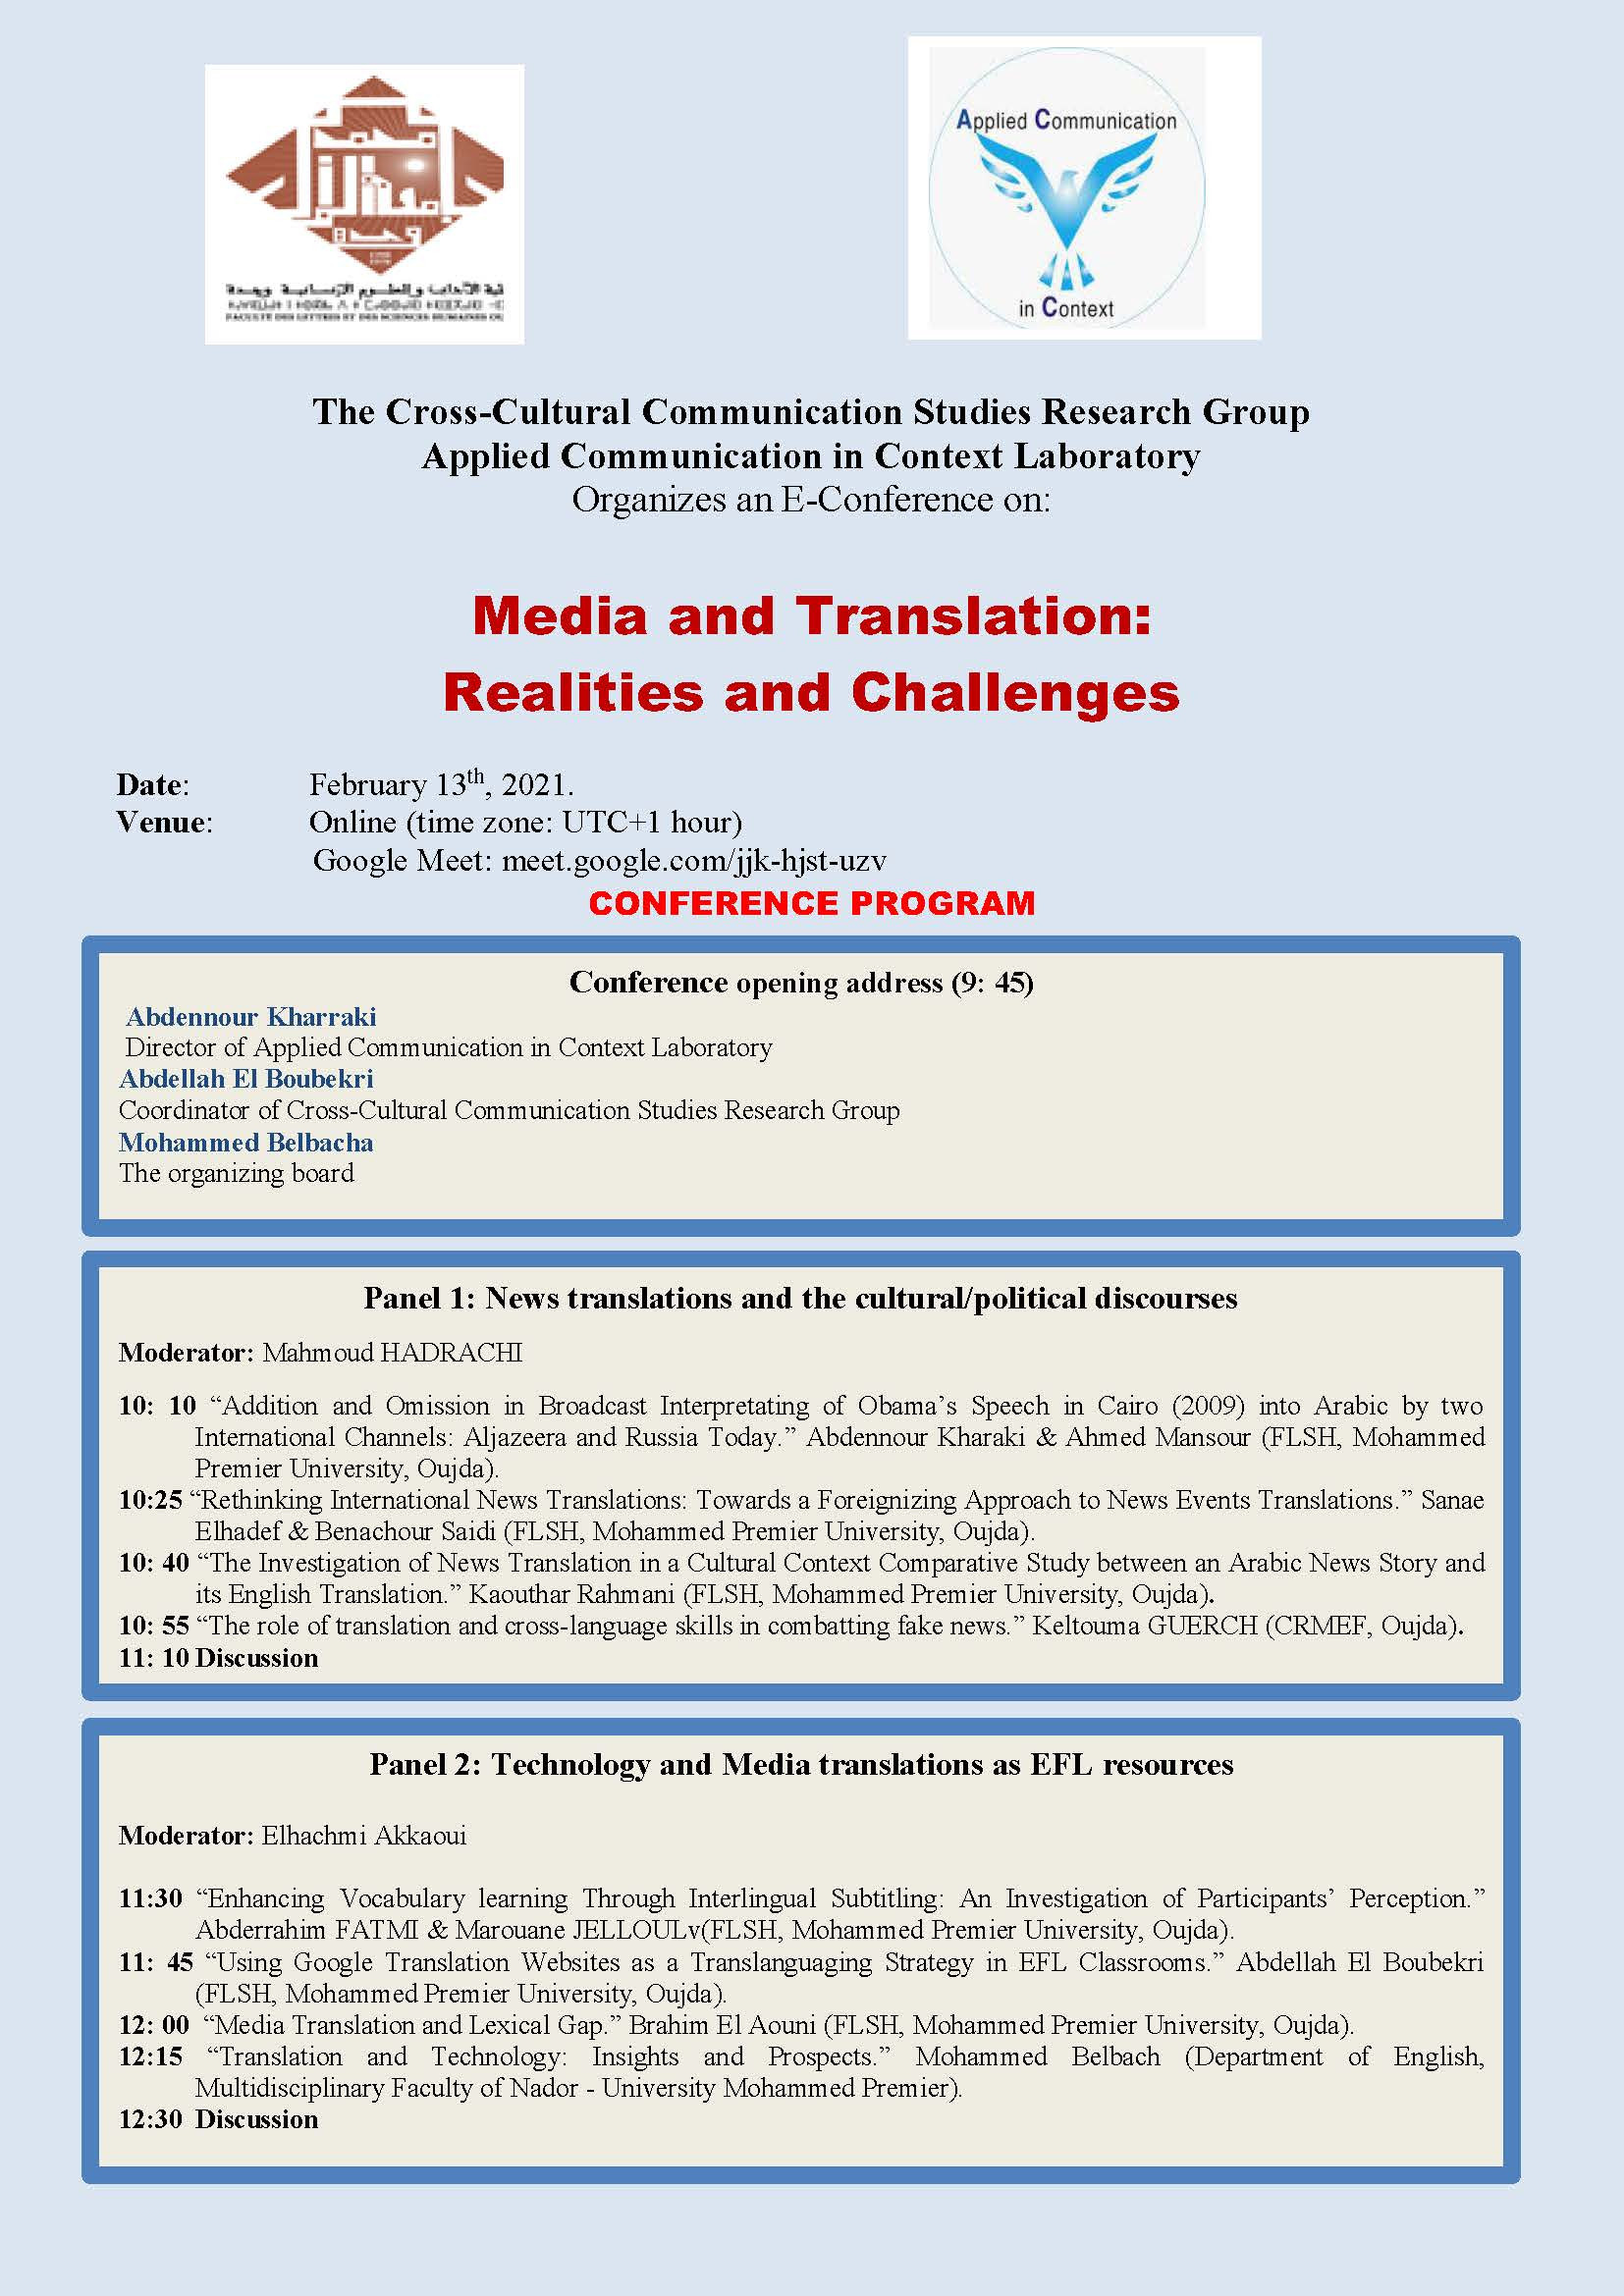 Media and Translation